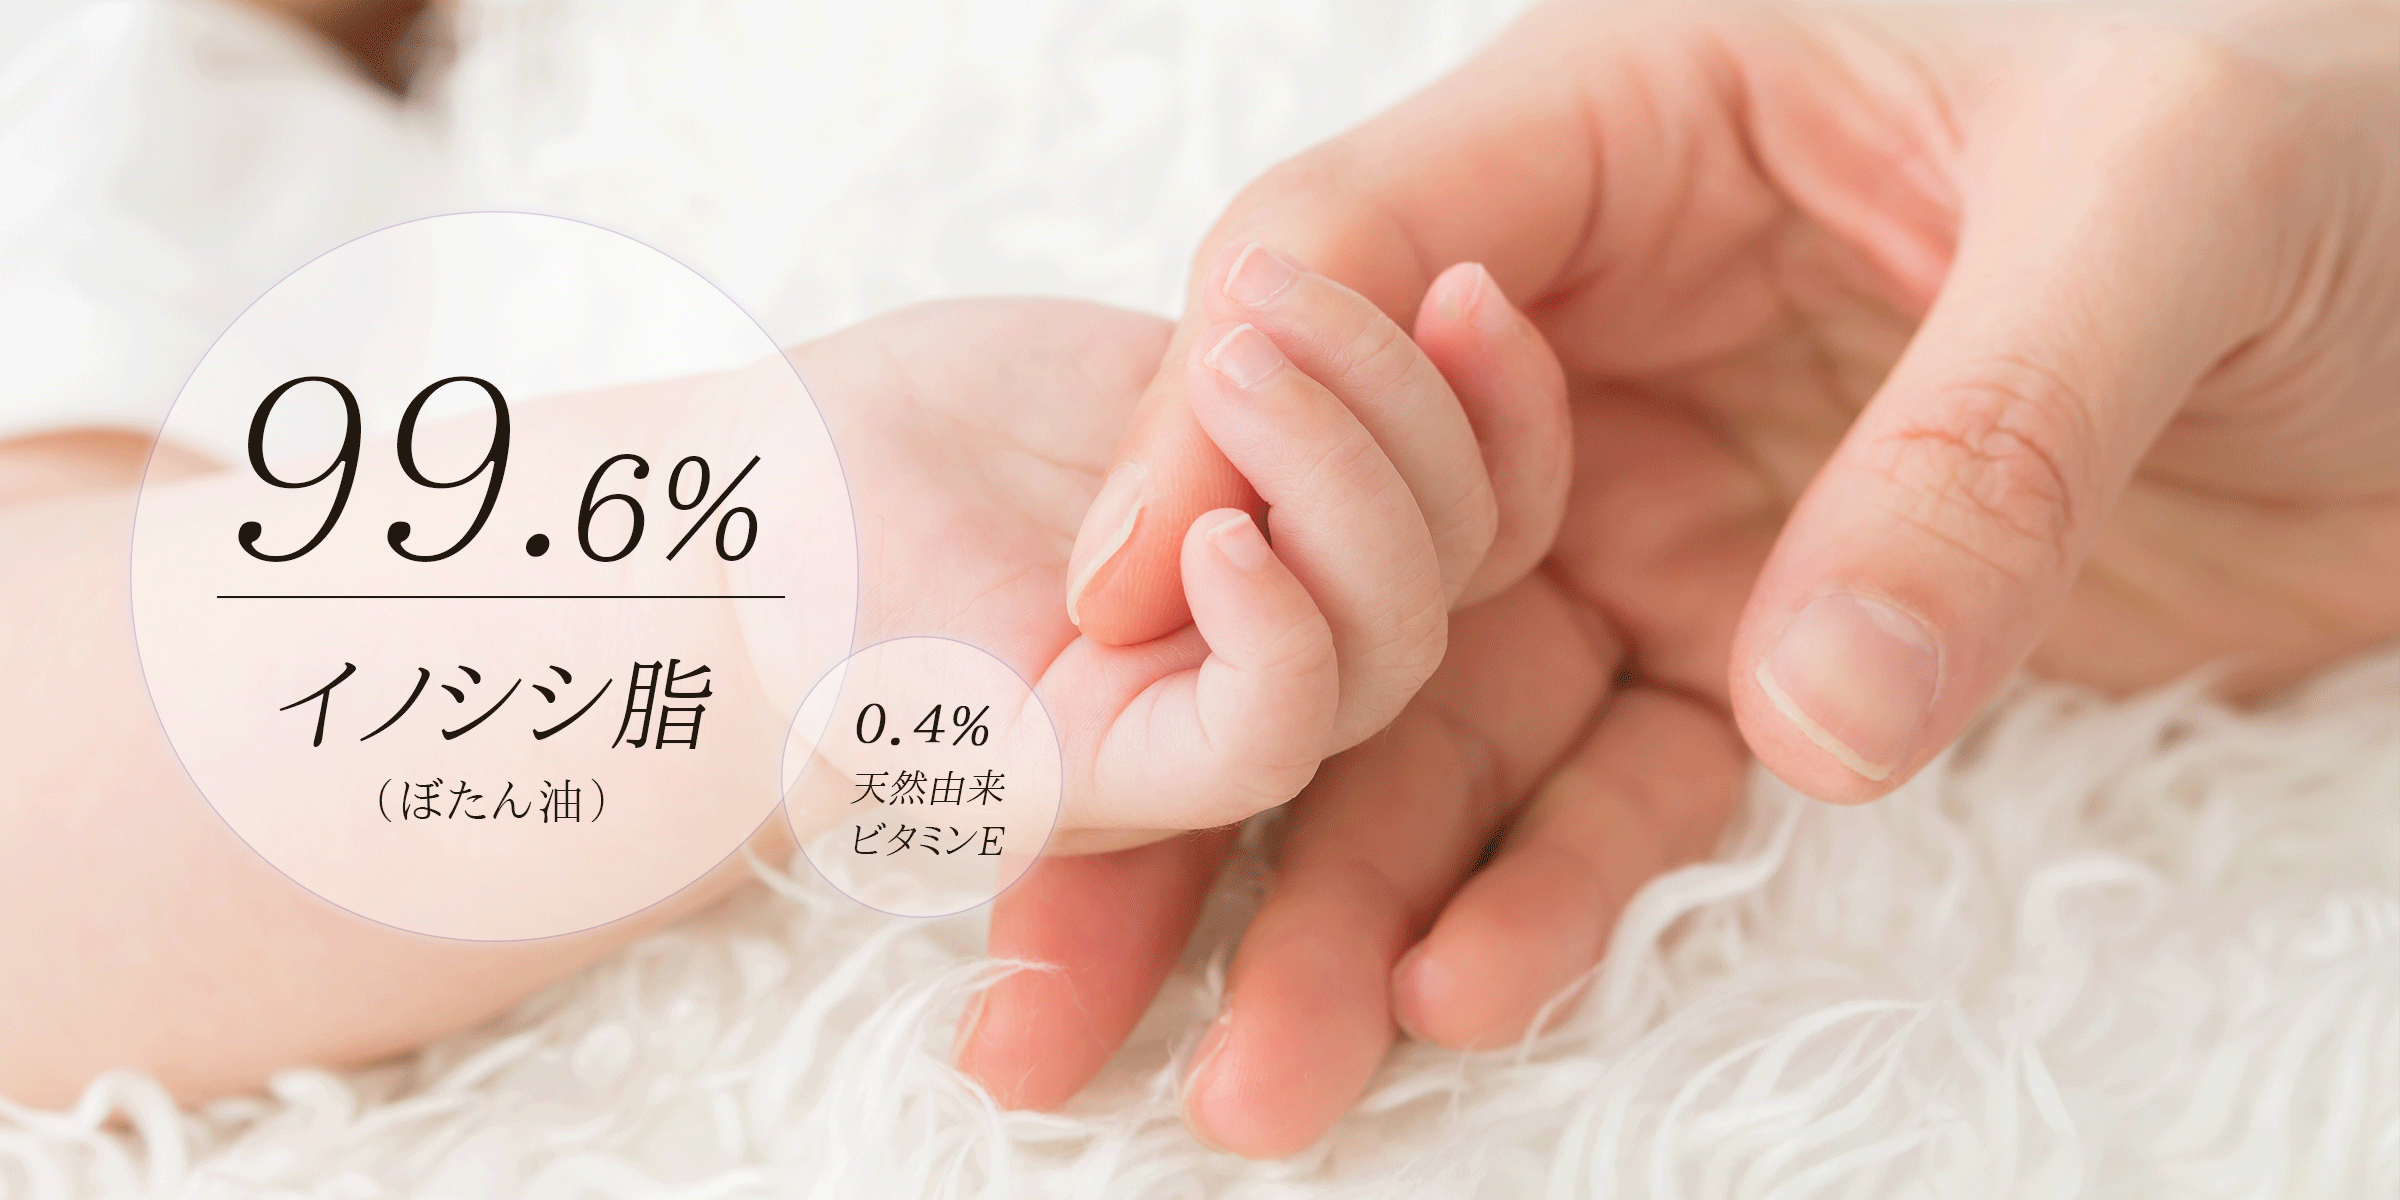 TAON タオン イノシシ クリーム 保湿オイル 乾燥肌 敏感肌 乳幼児 ママ スキンケア ボディクリーム 猪 日本